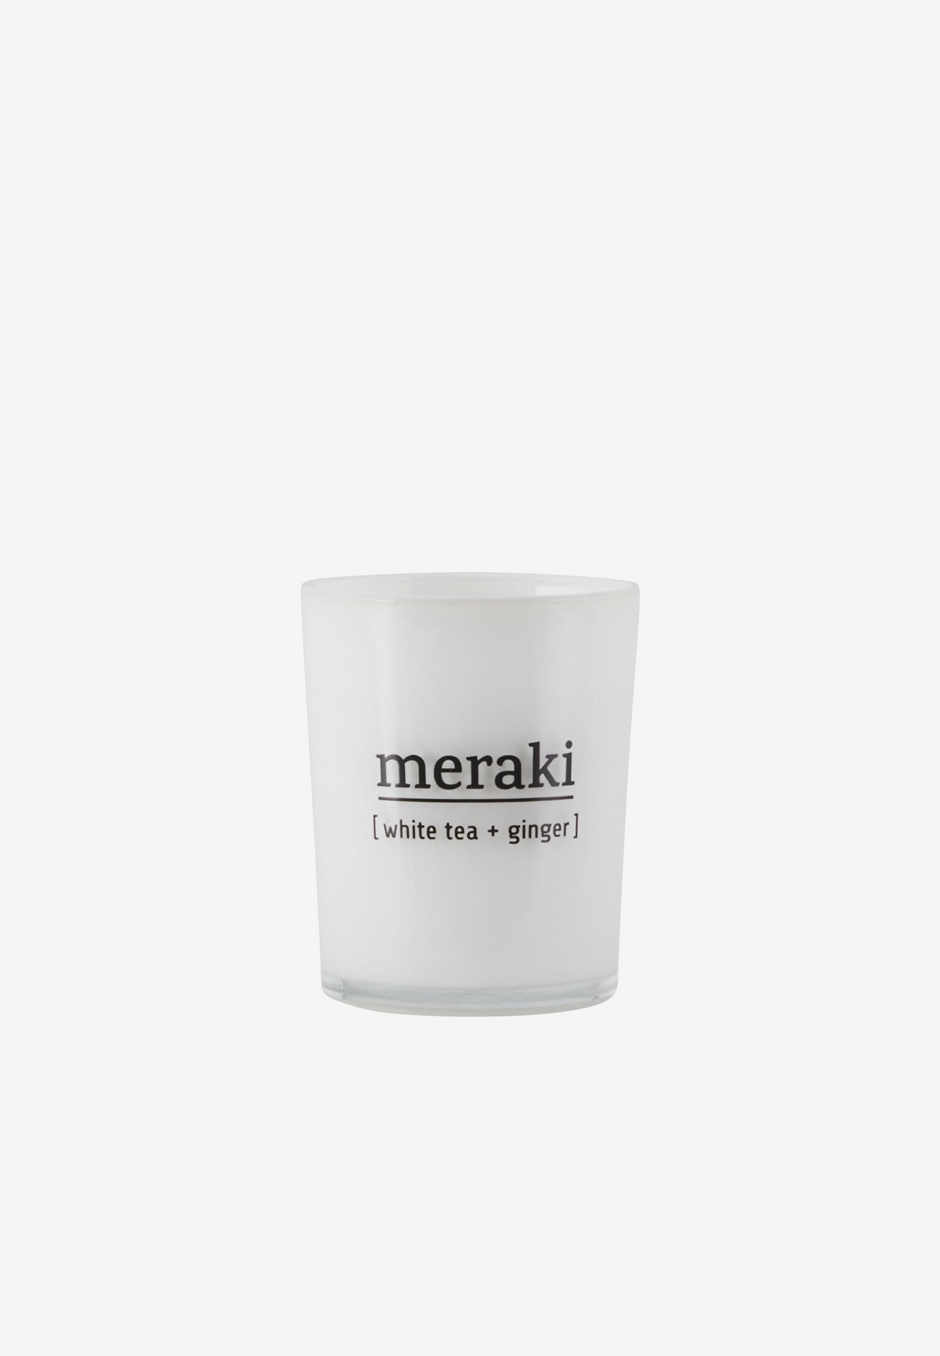 Meraki Scented Candle White Tea & Ginger